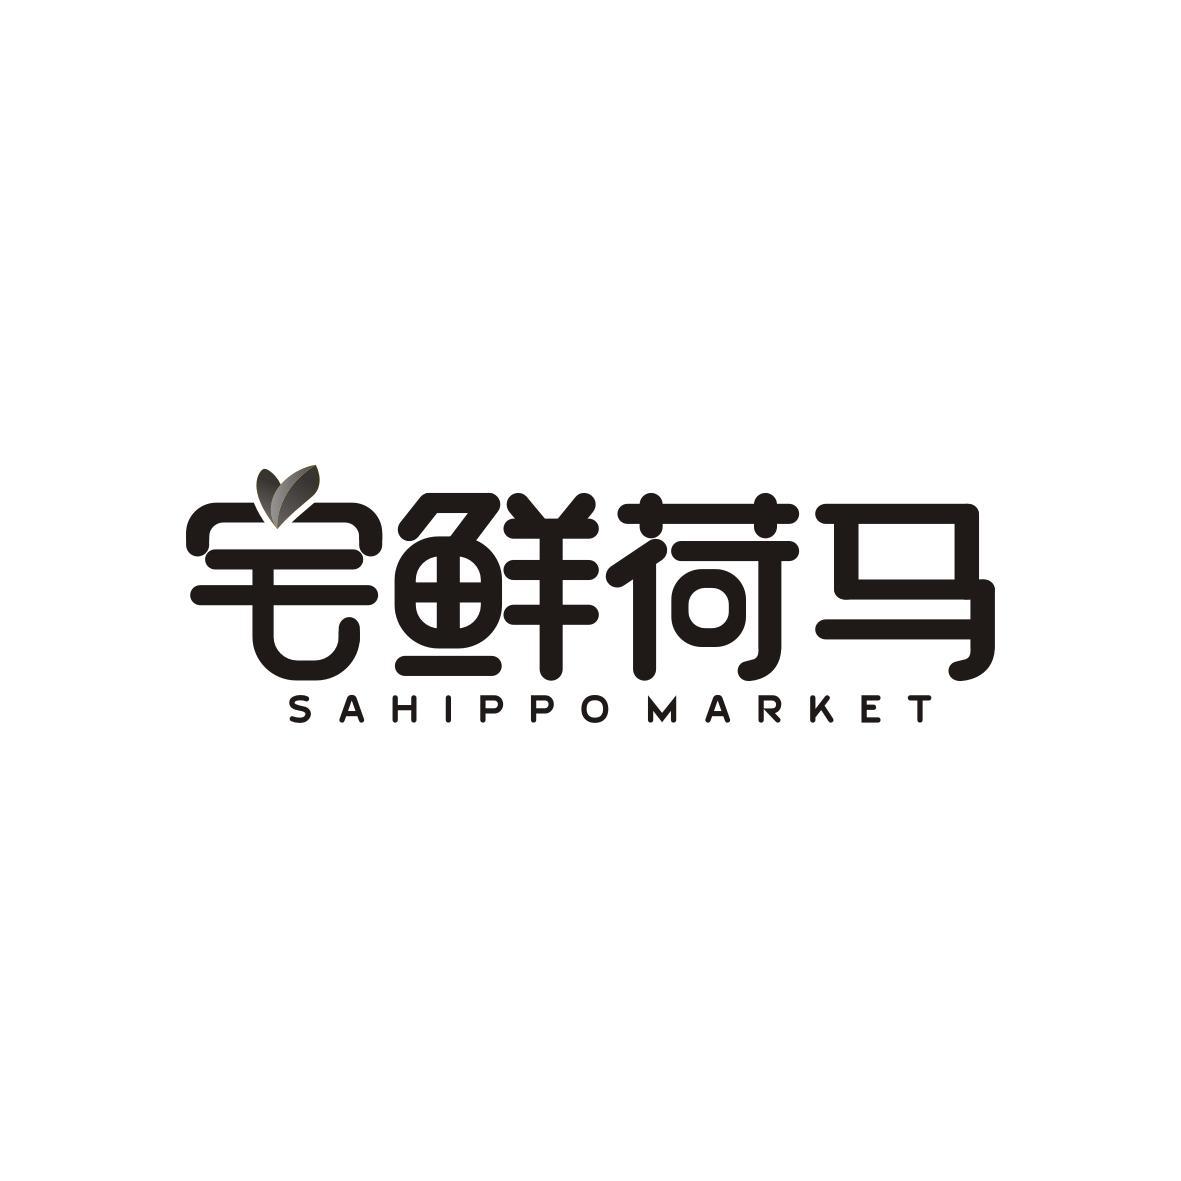 宅鲜荷马
Sahippo Market